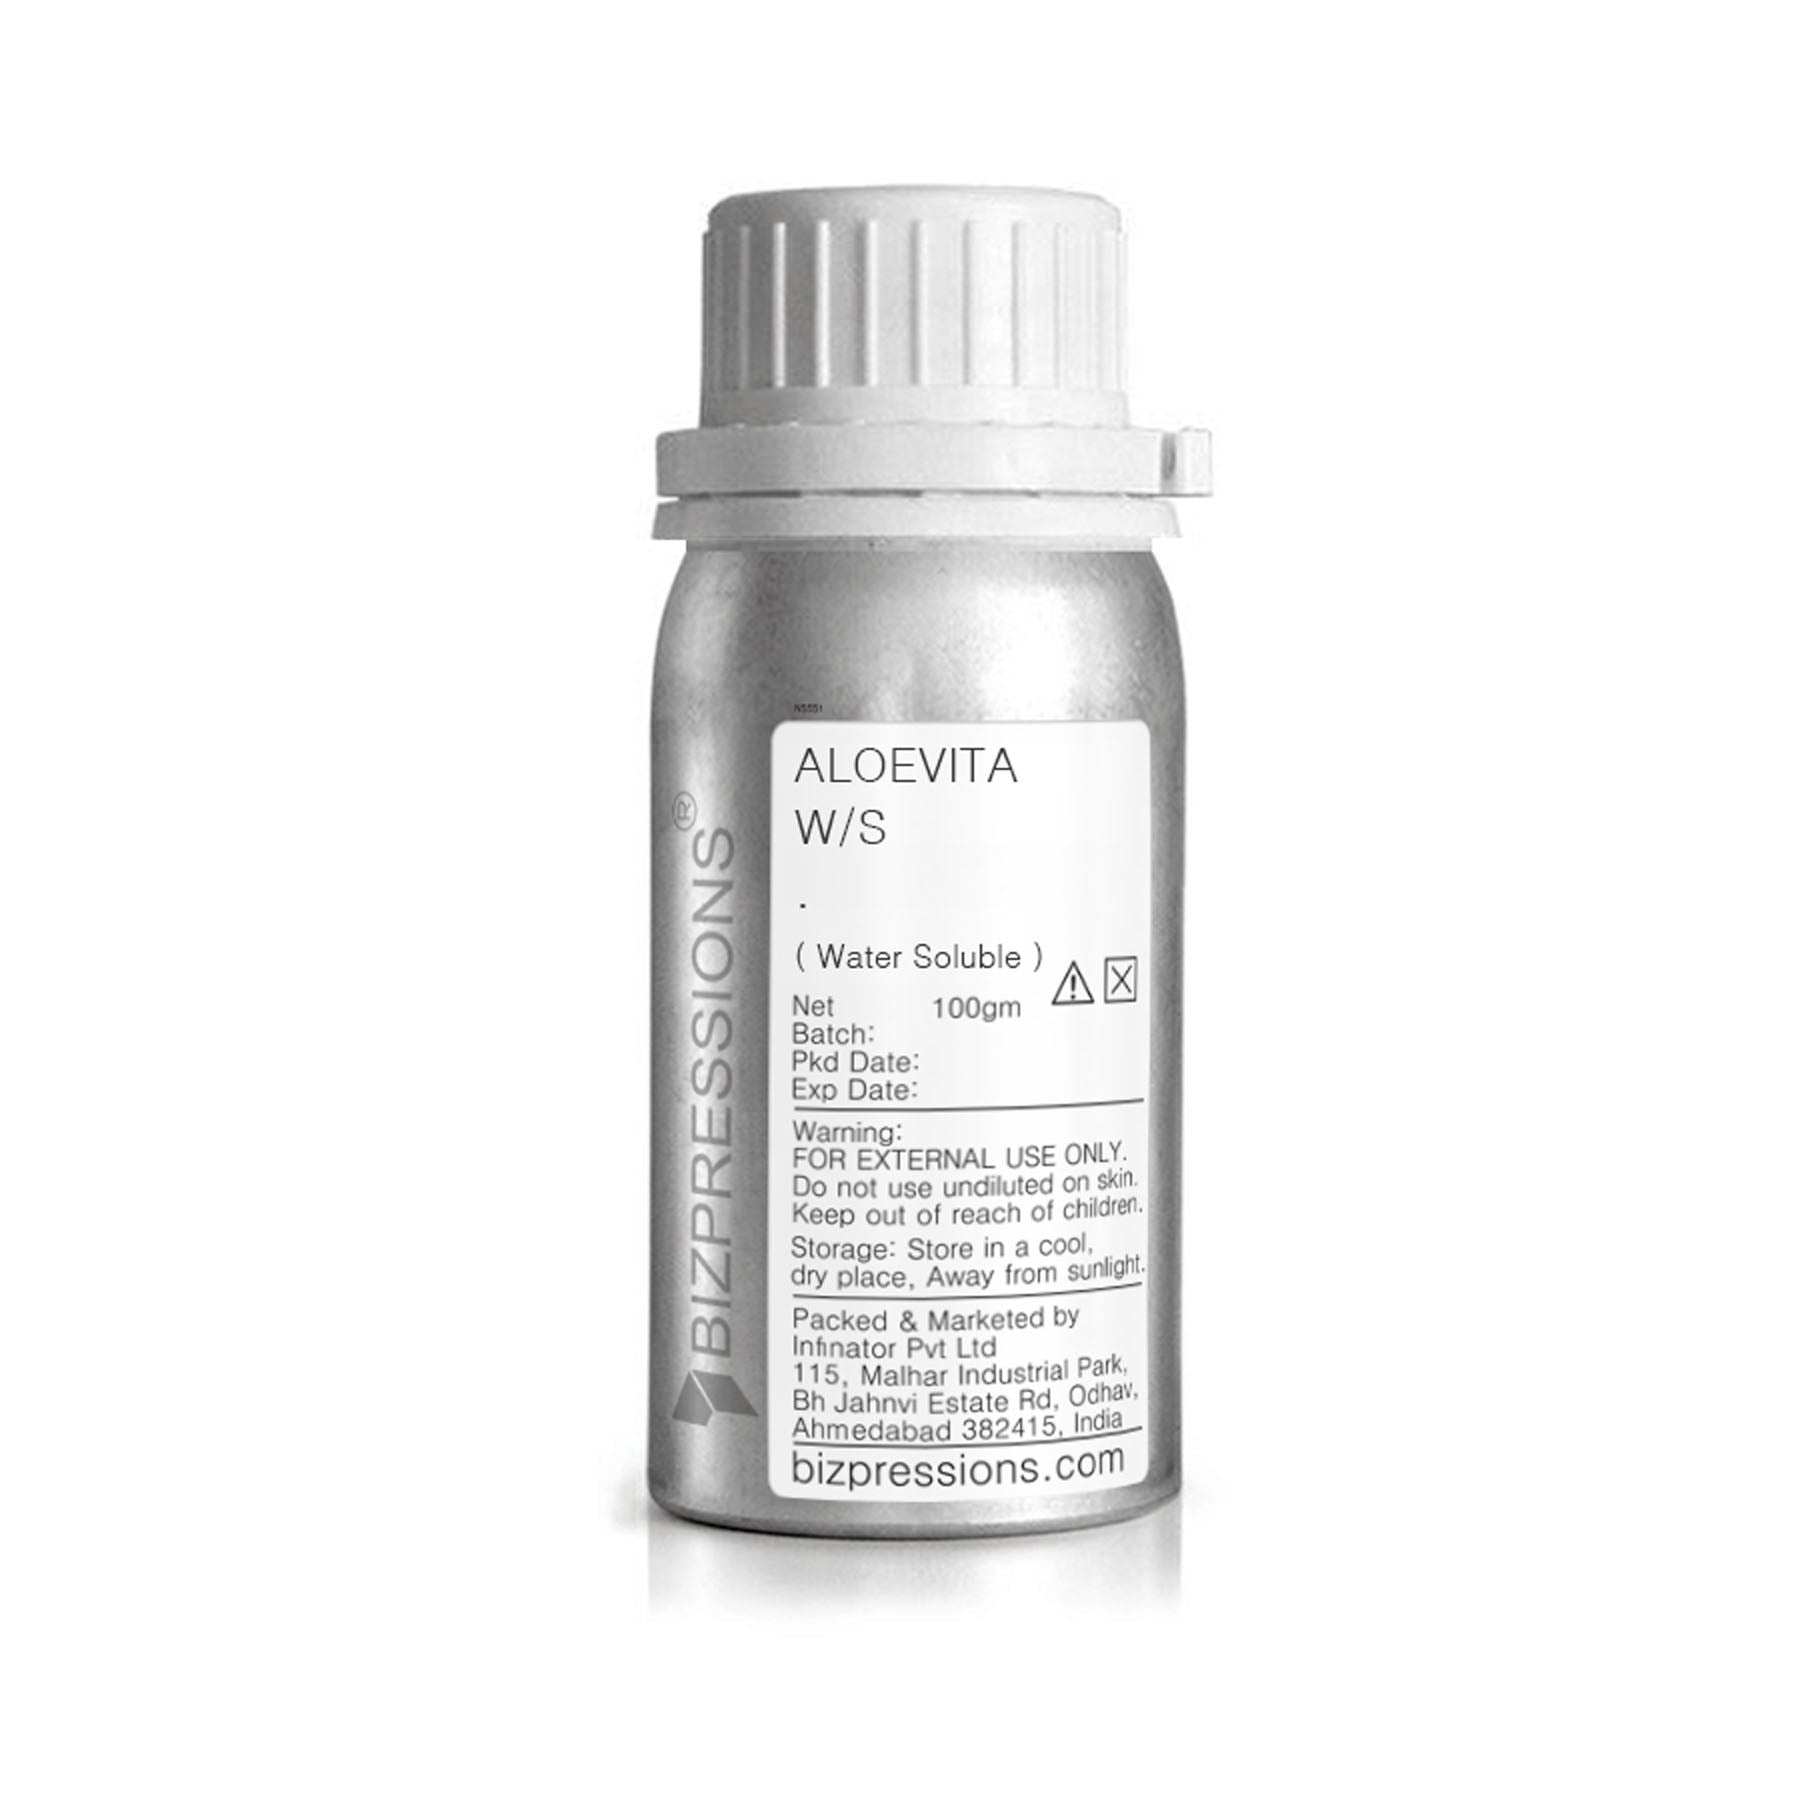 ALOEVITA W/S - Fragrance ( Water Soluble ) - 100 gm